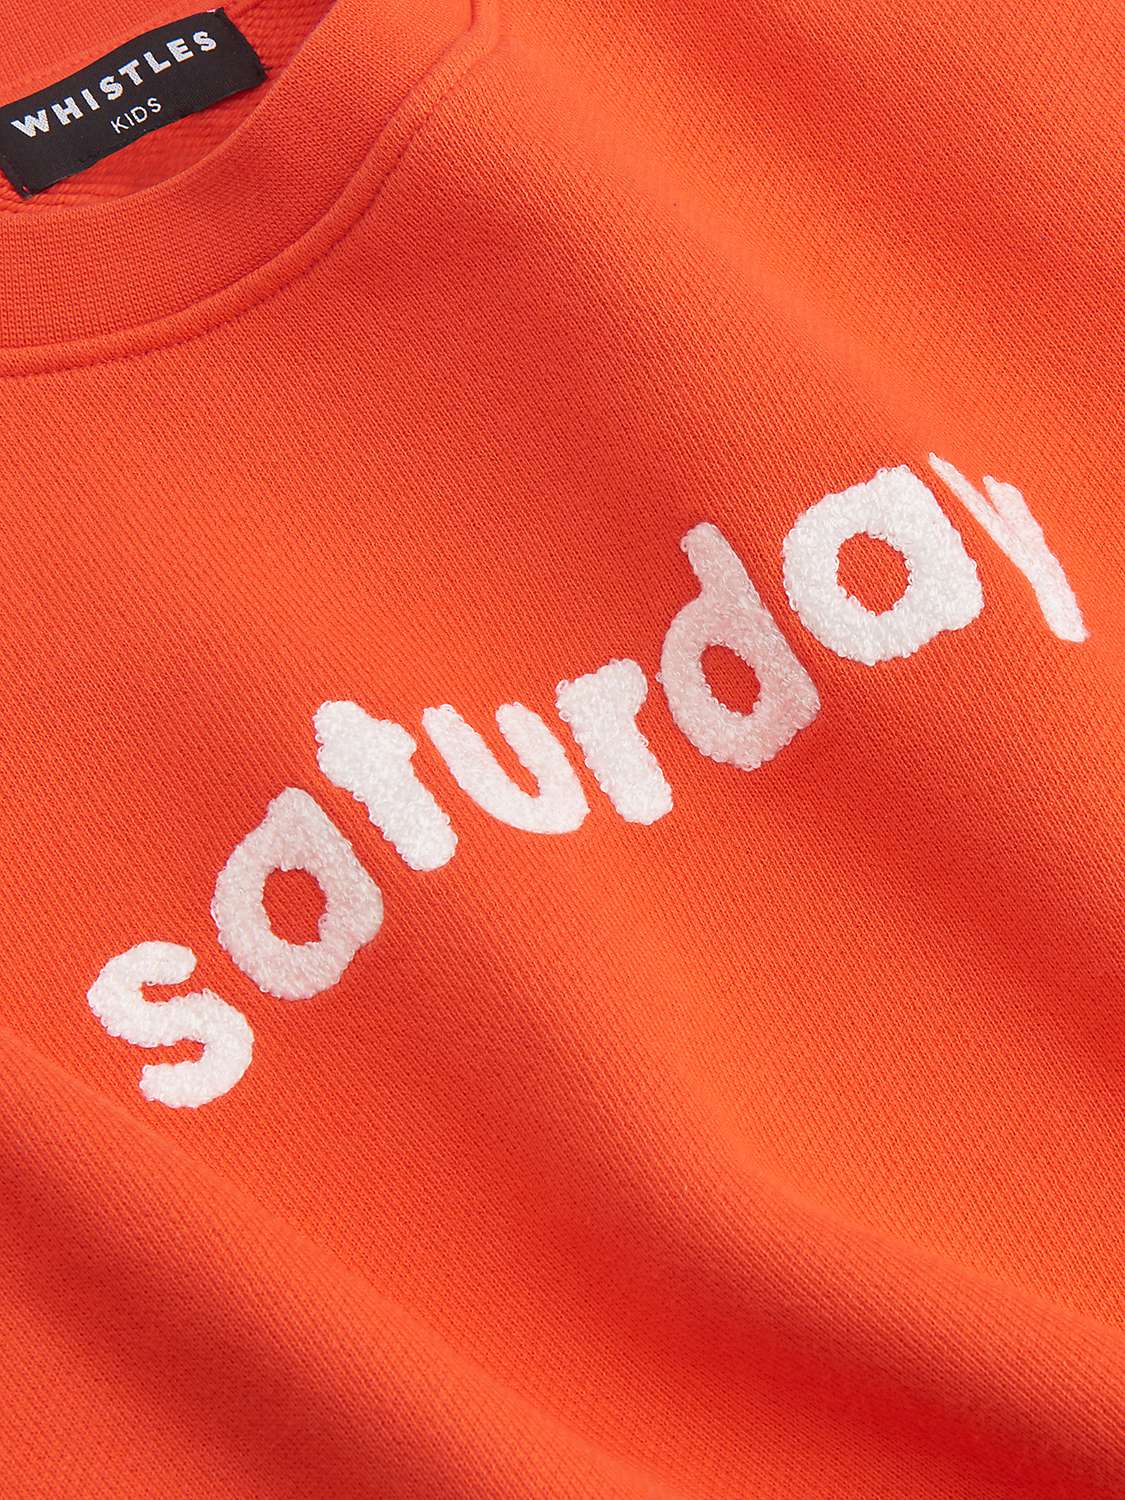 Buy Whistles Kids' Saturday Sweatshirt, Red Online at johnlewis.com